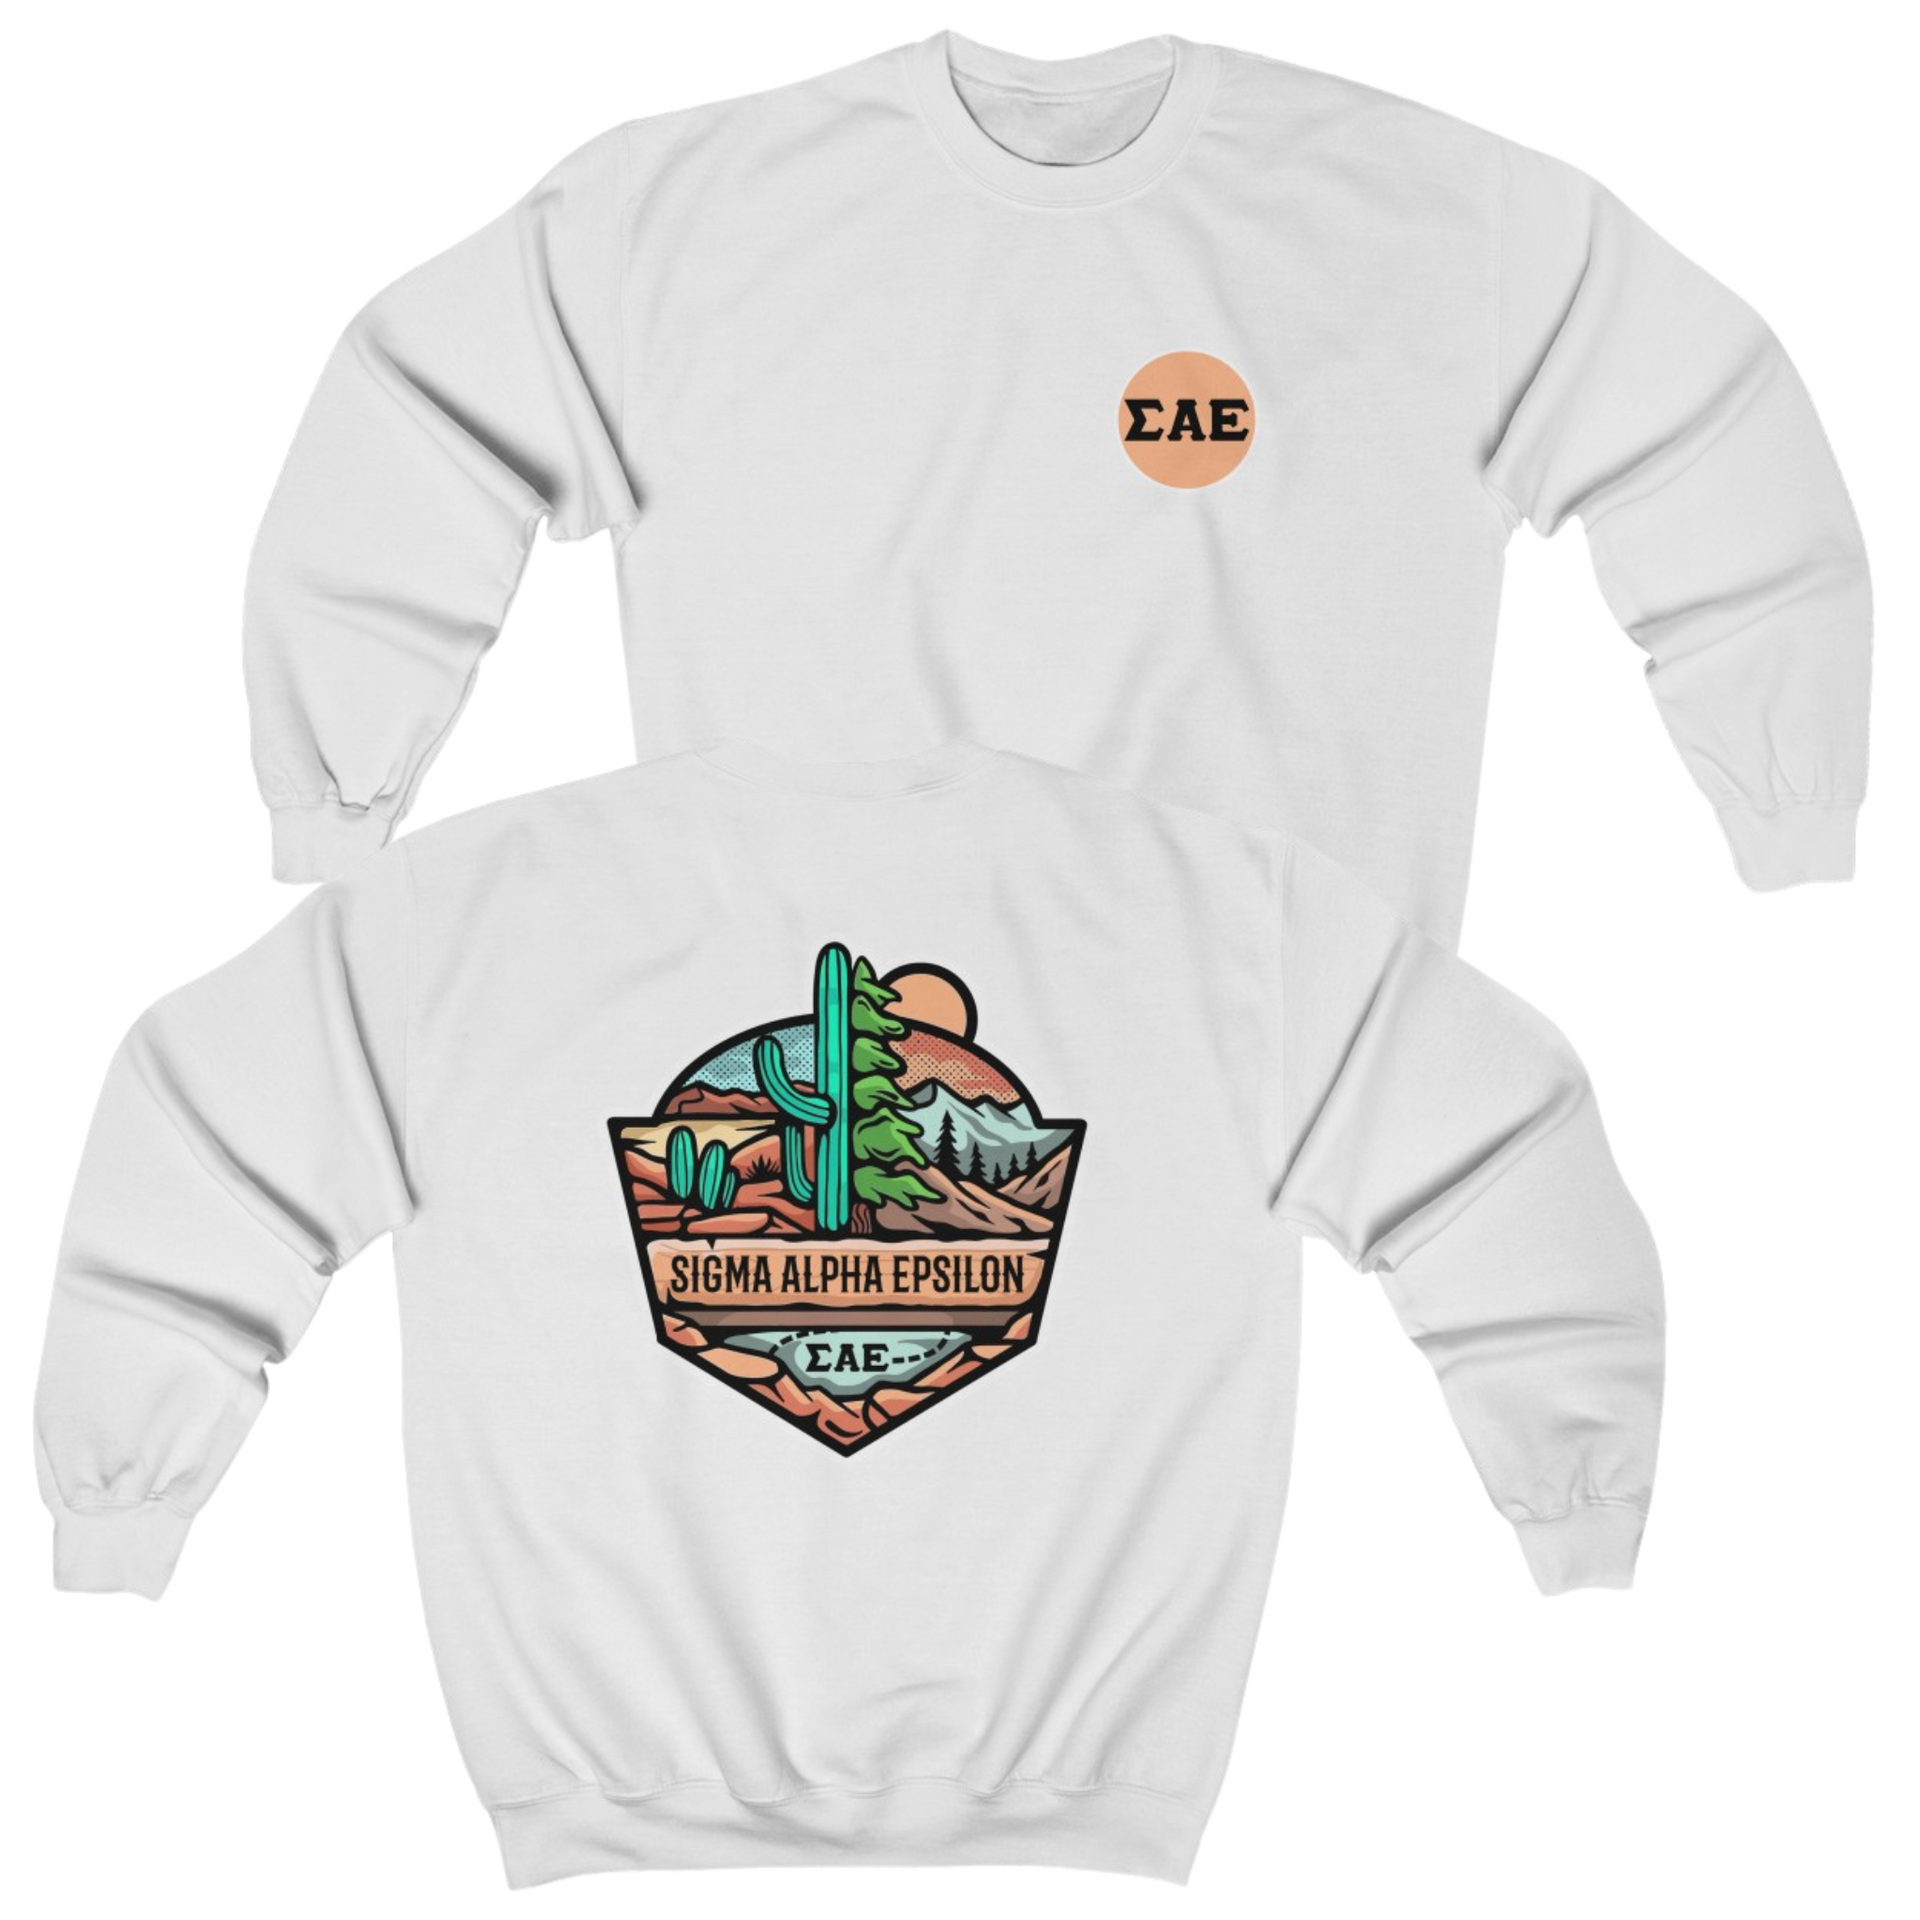 White Sigma Alpha Epsilon Graphic Crewneck Sweatshirt | Desert Mountains | Sigma Alpha Epsilon Clothing and Merchandise 